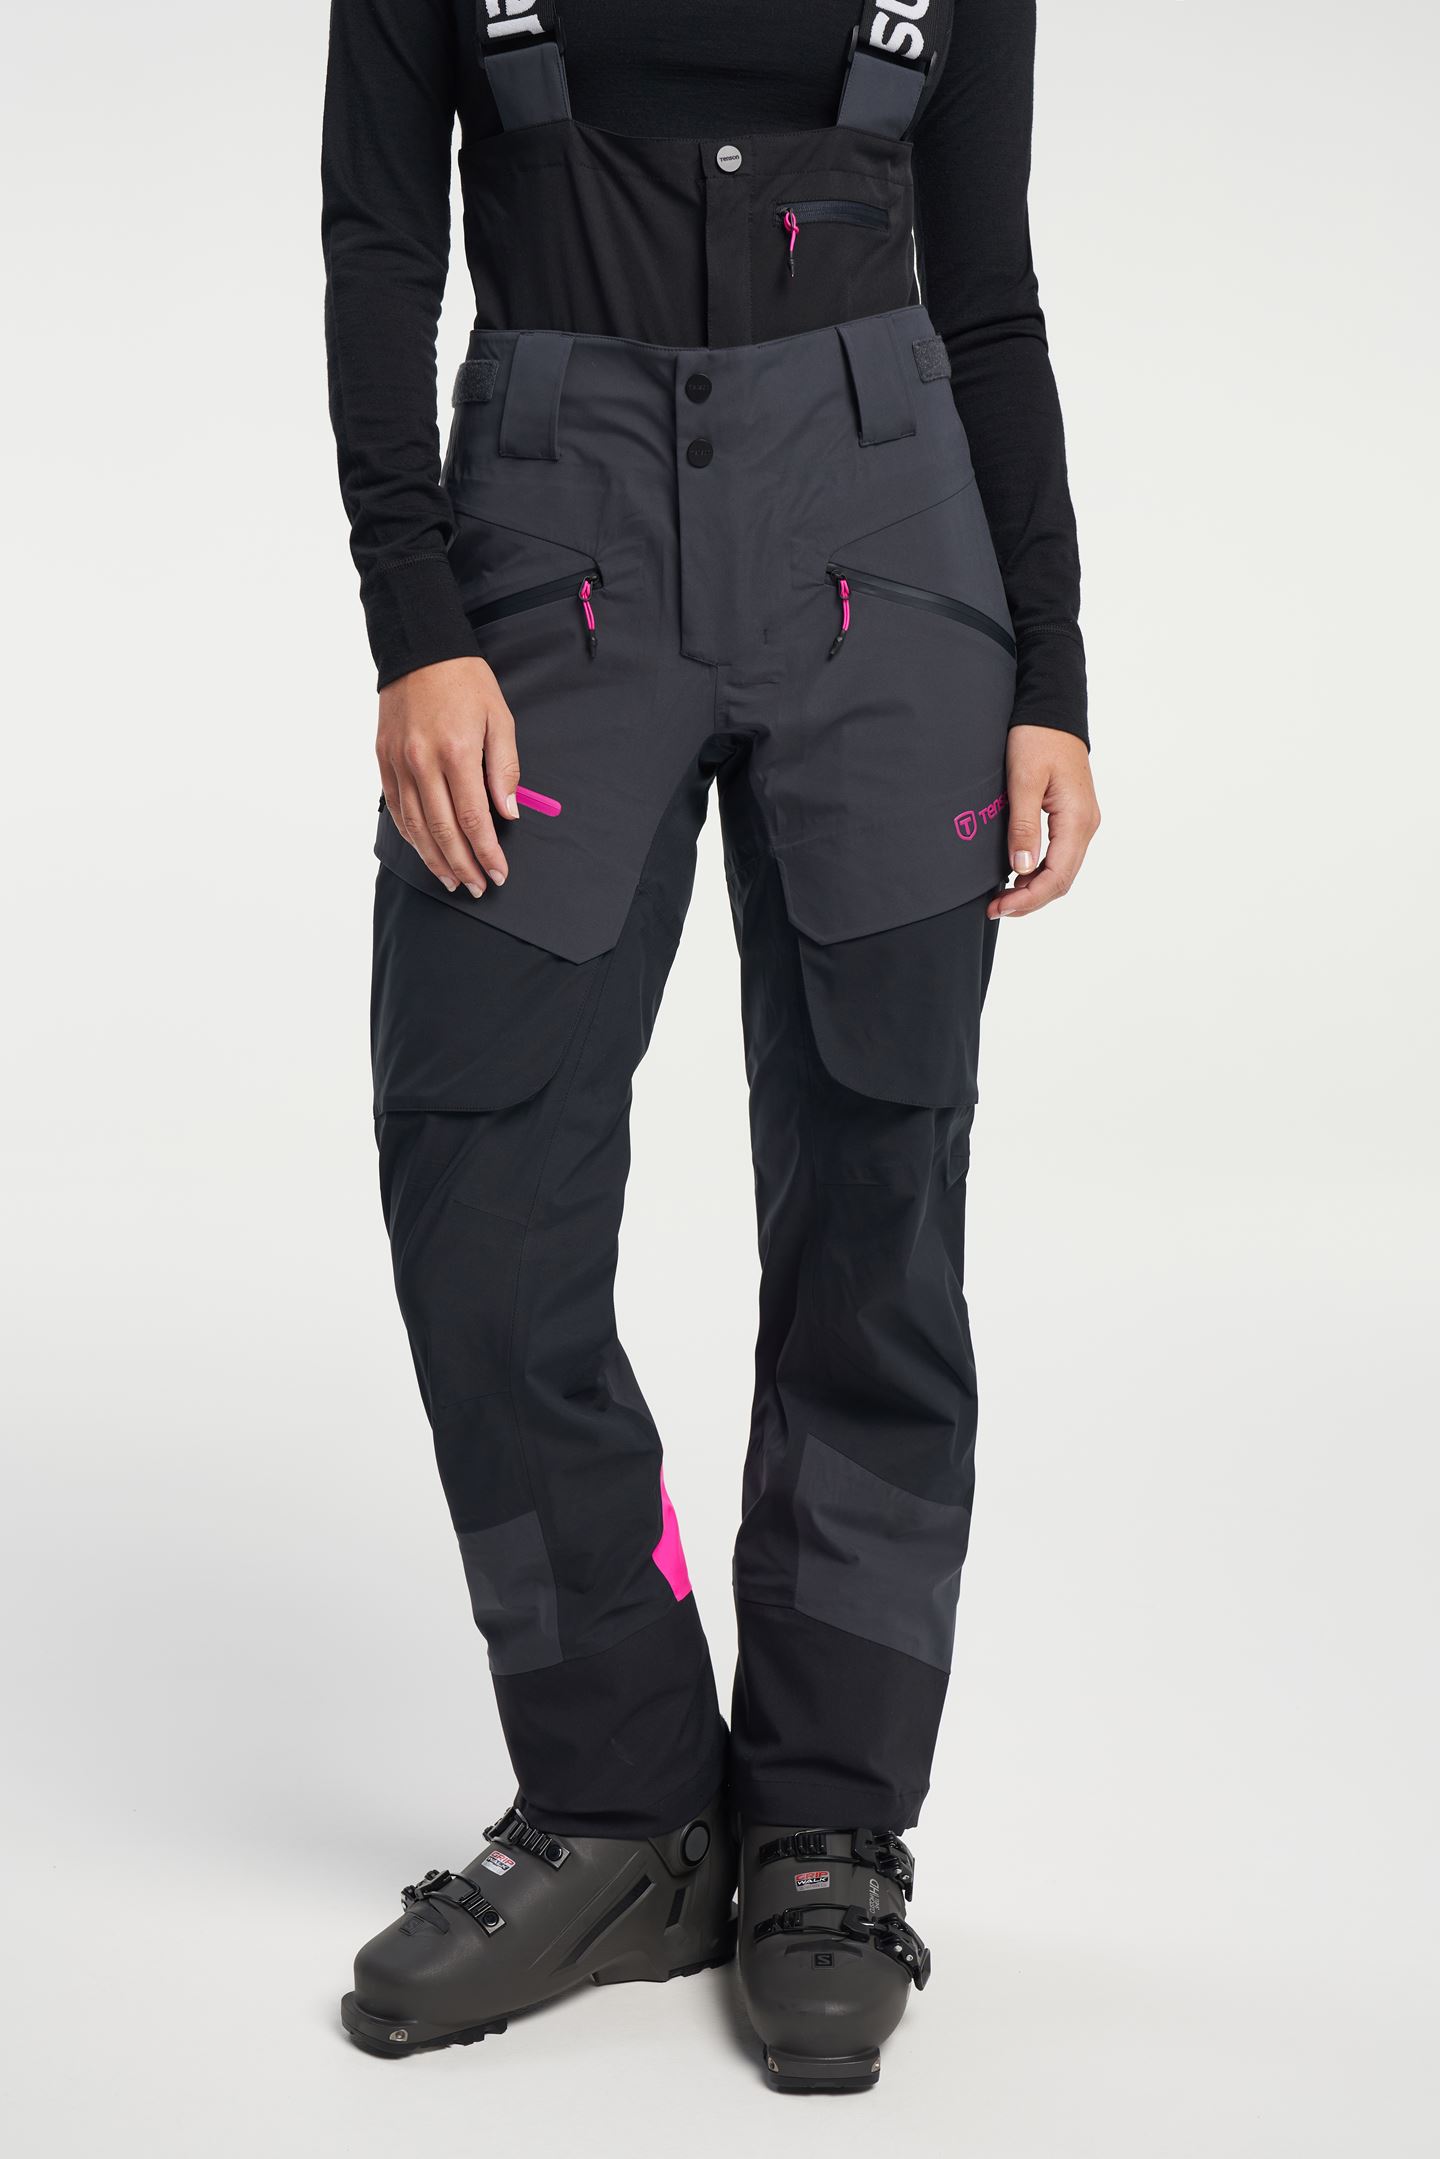 Tour Softshell Pants - Ski Touring Softshell Trousers for Women